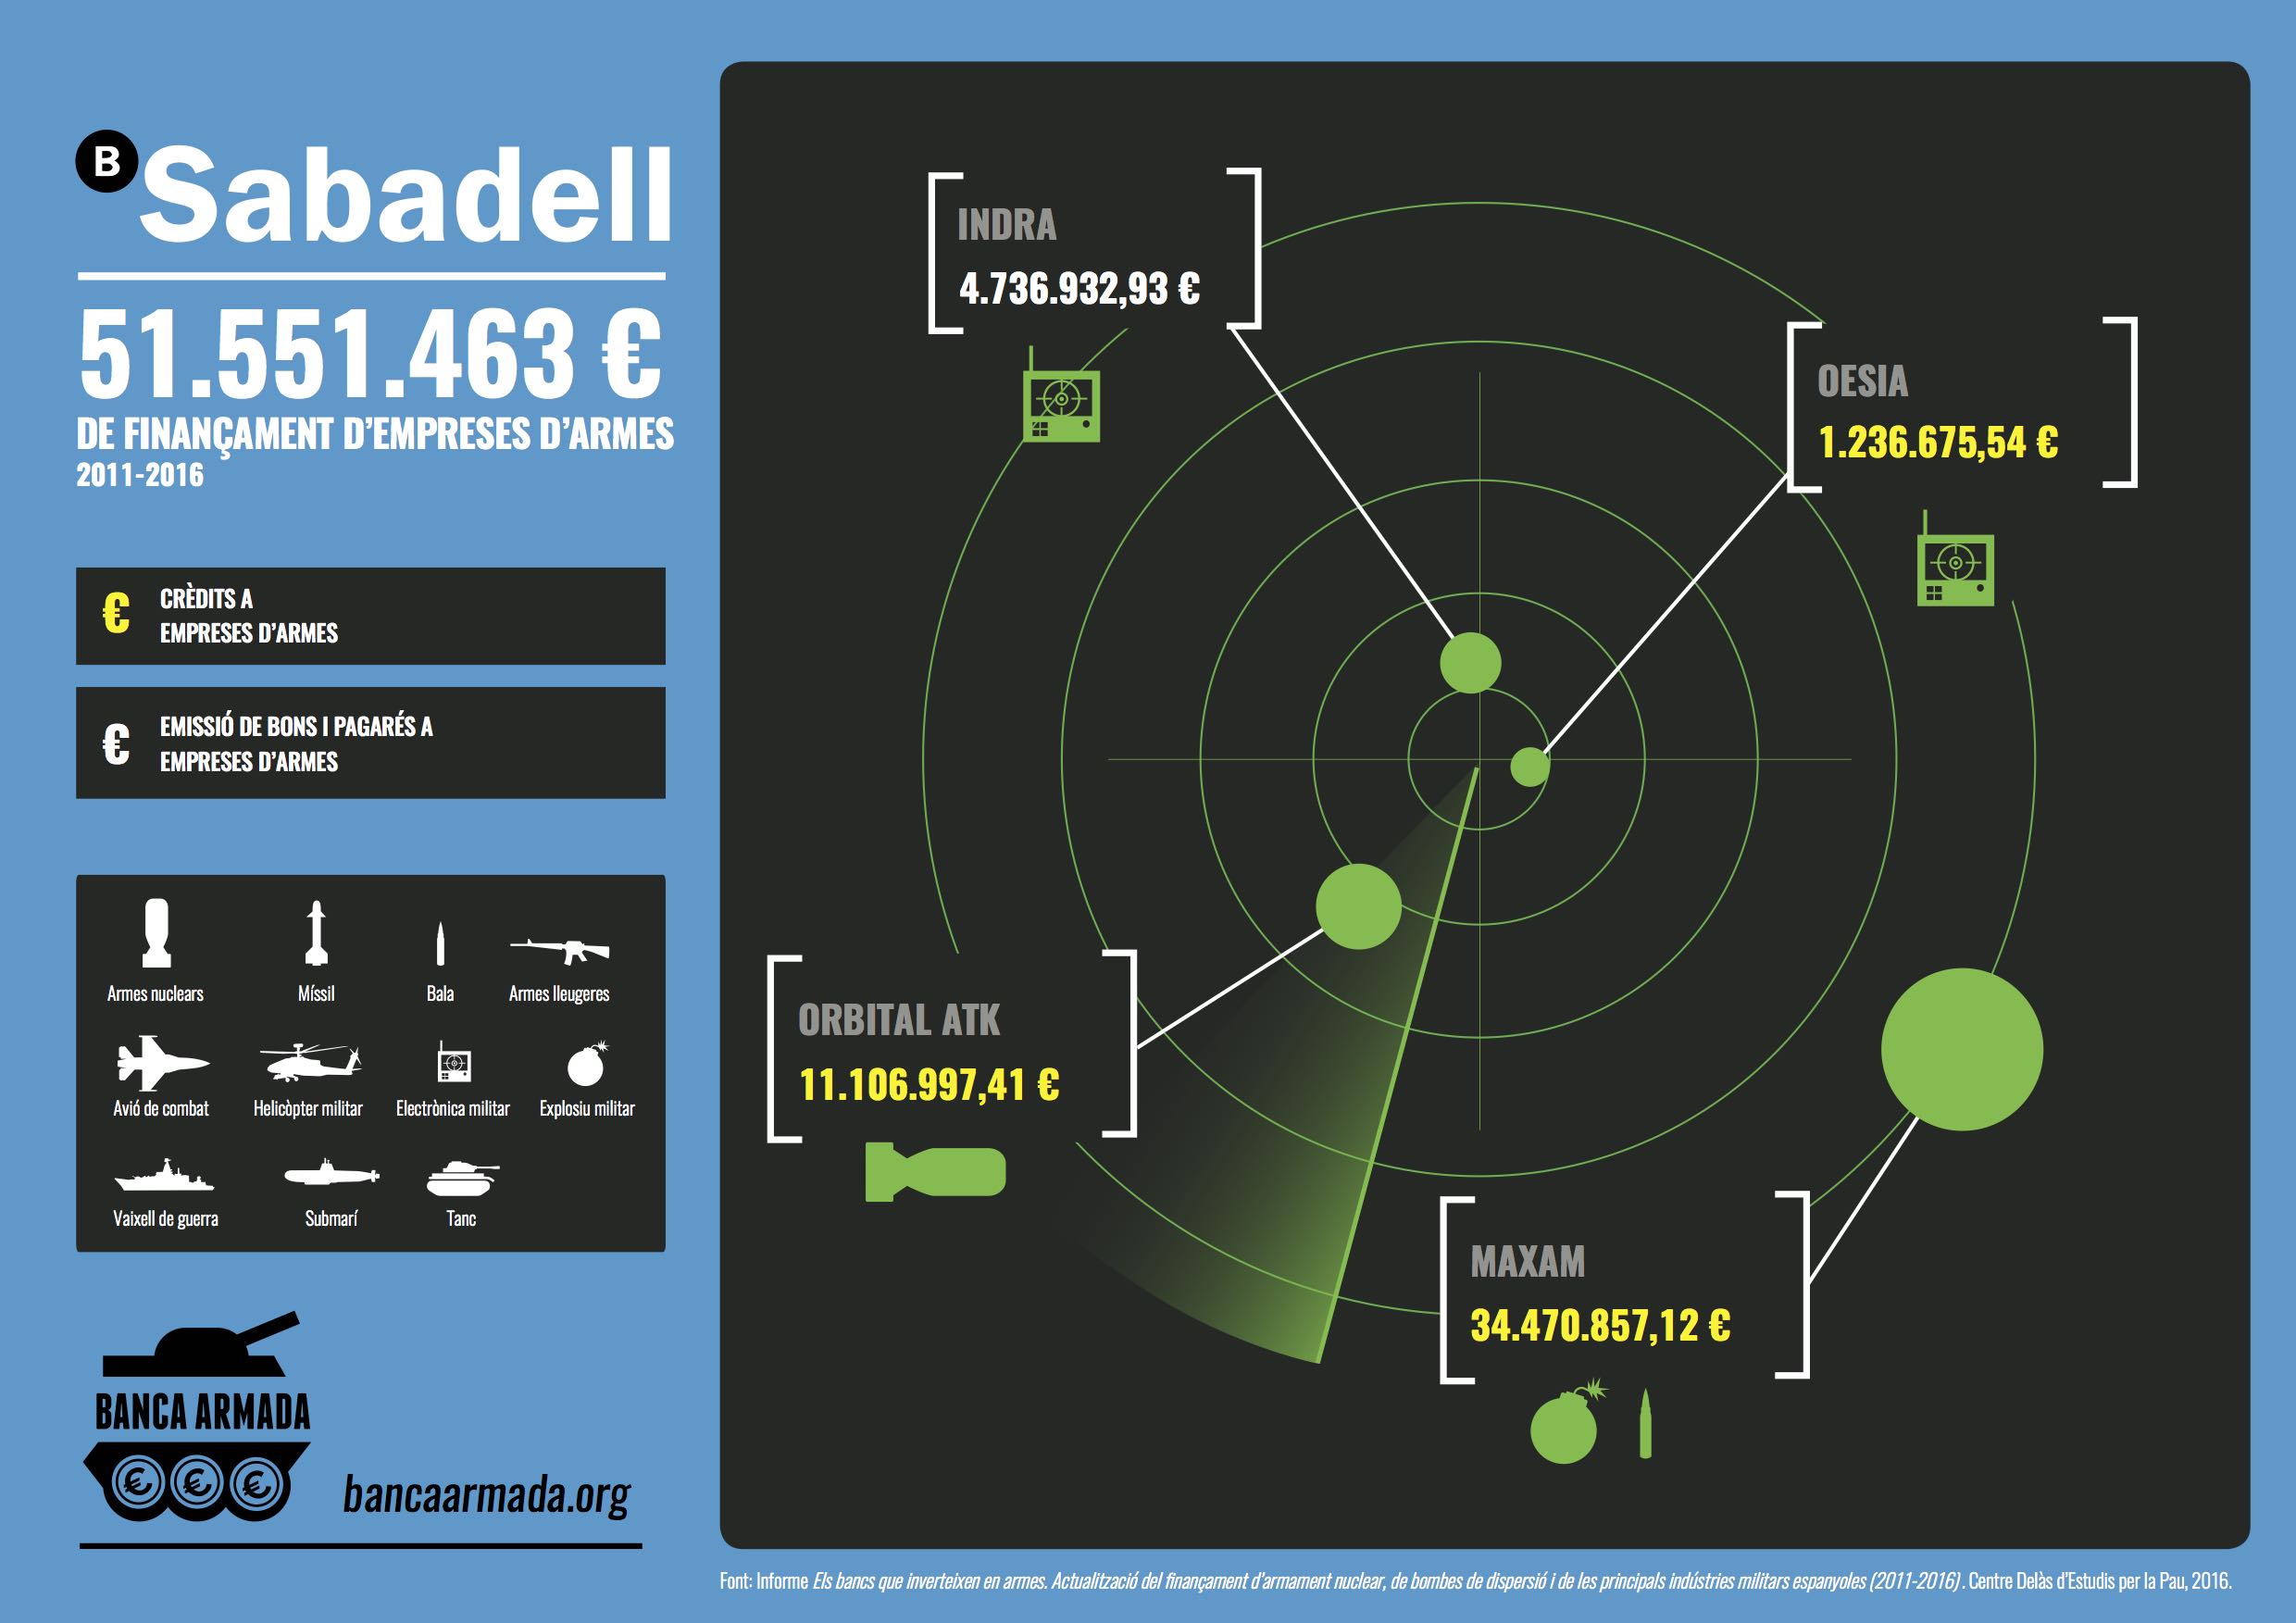 Infographics Banc Sabadell: Funding arms companies 2011-2016